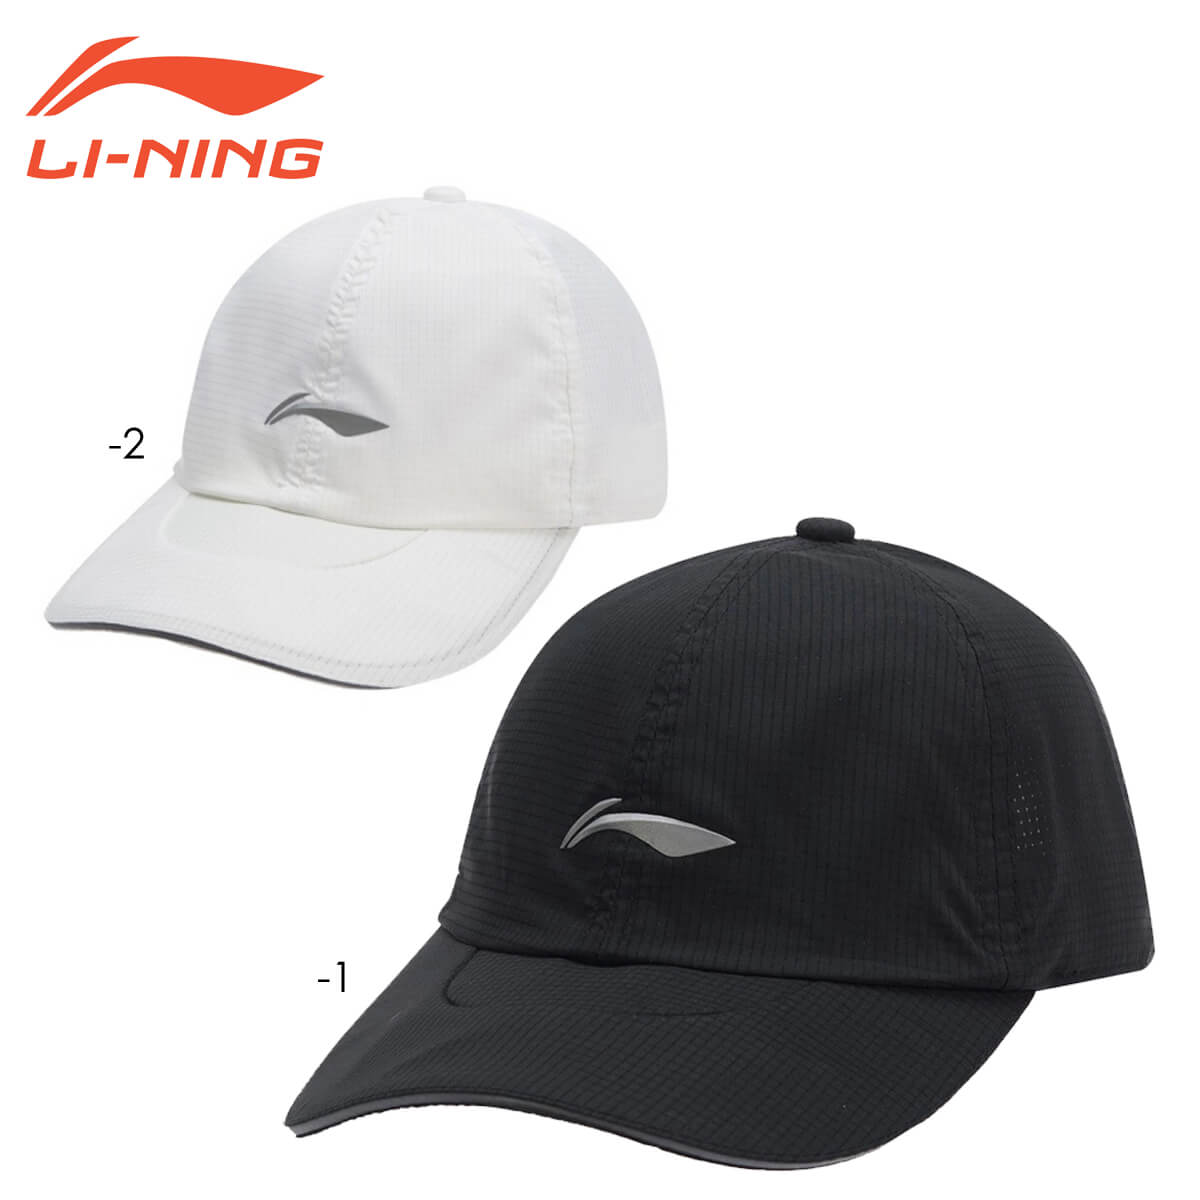 LI-NING AMYR108 キャップ 帽子 ユニ/メンズ ランニング スポーツ リーニン